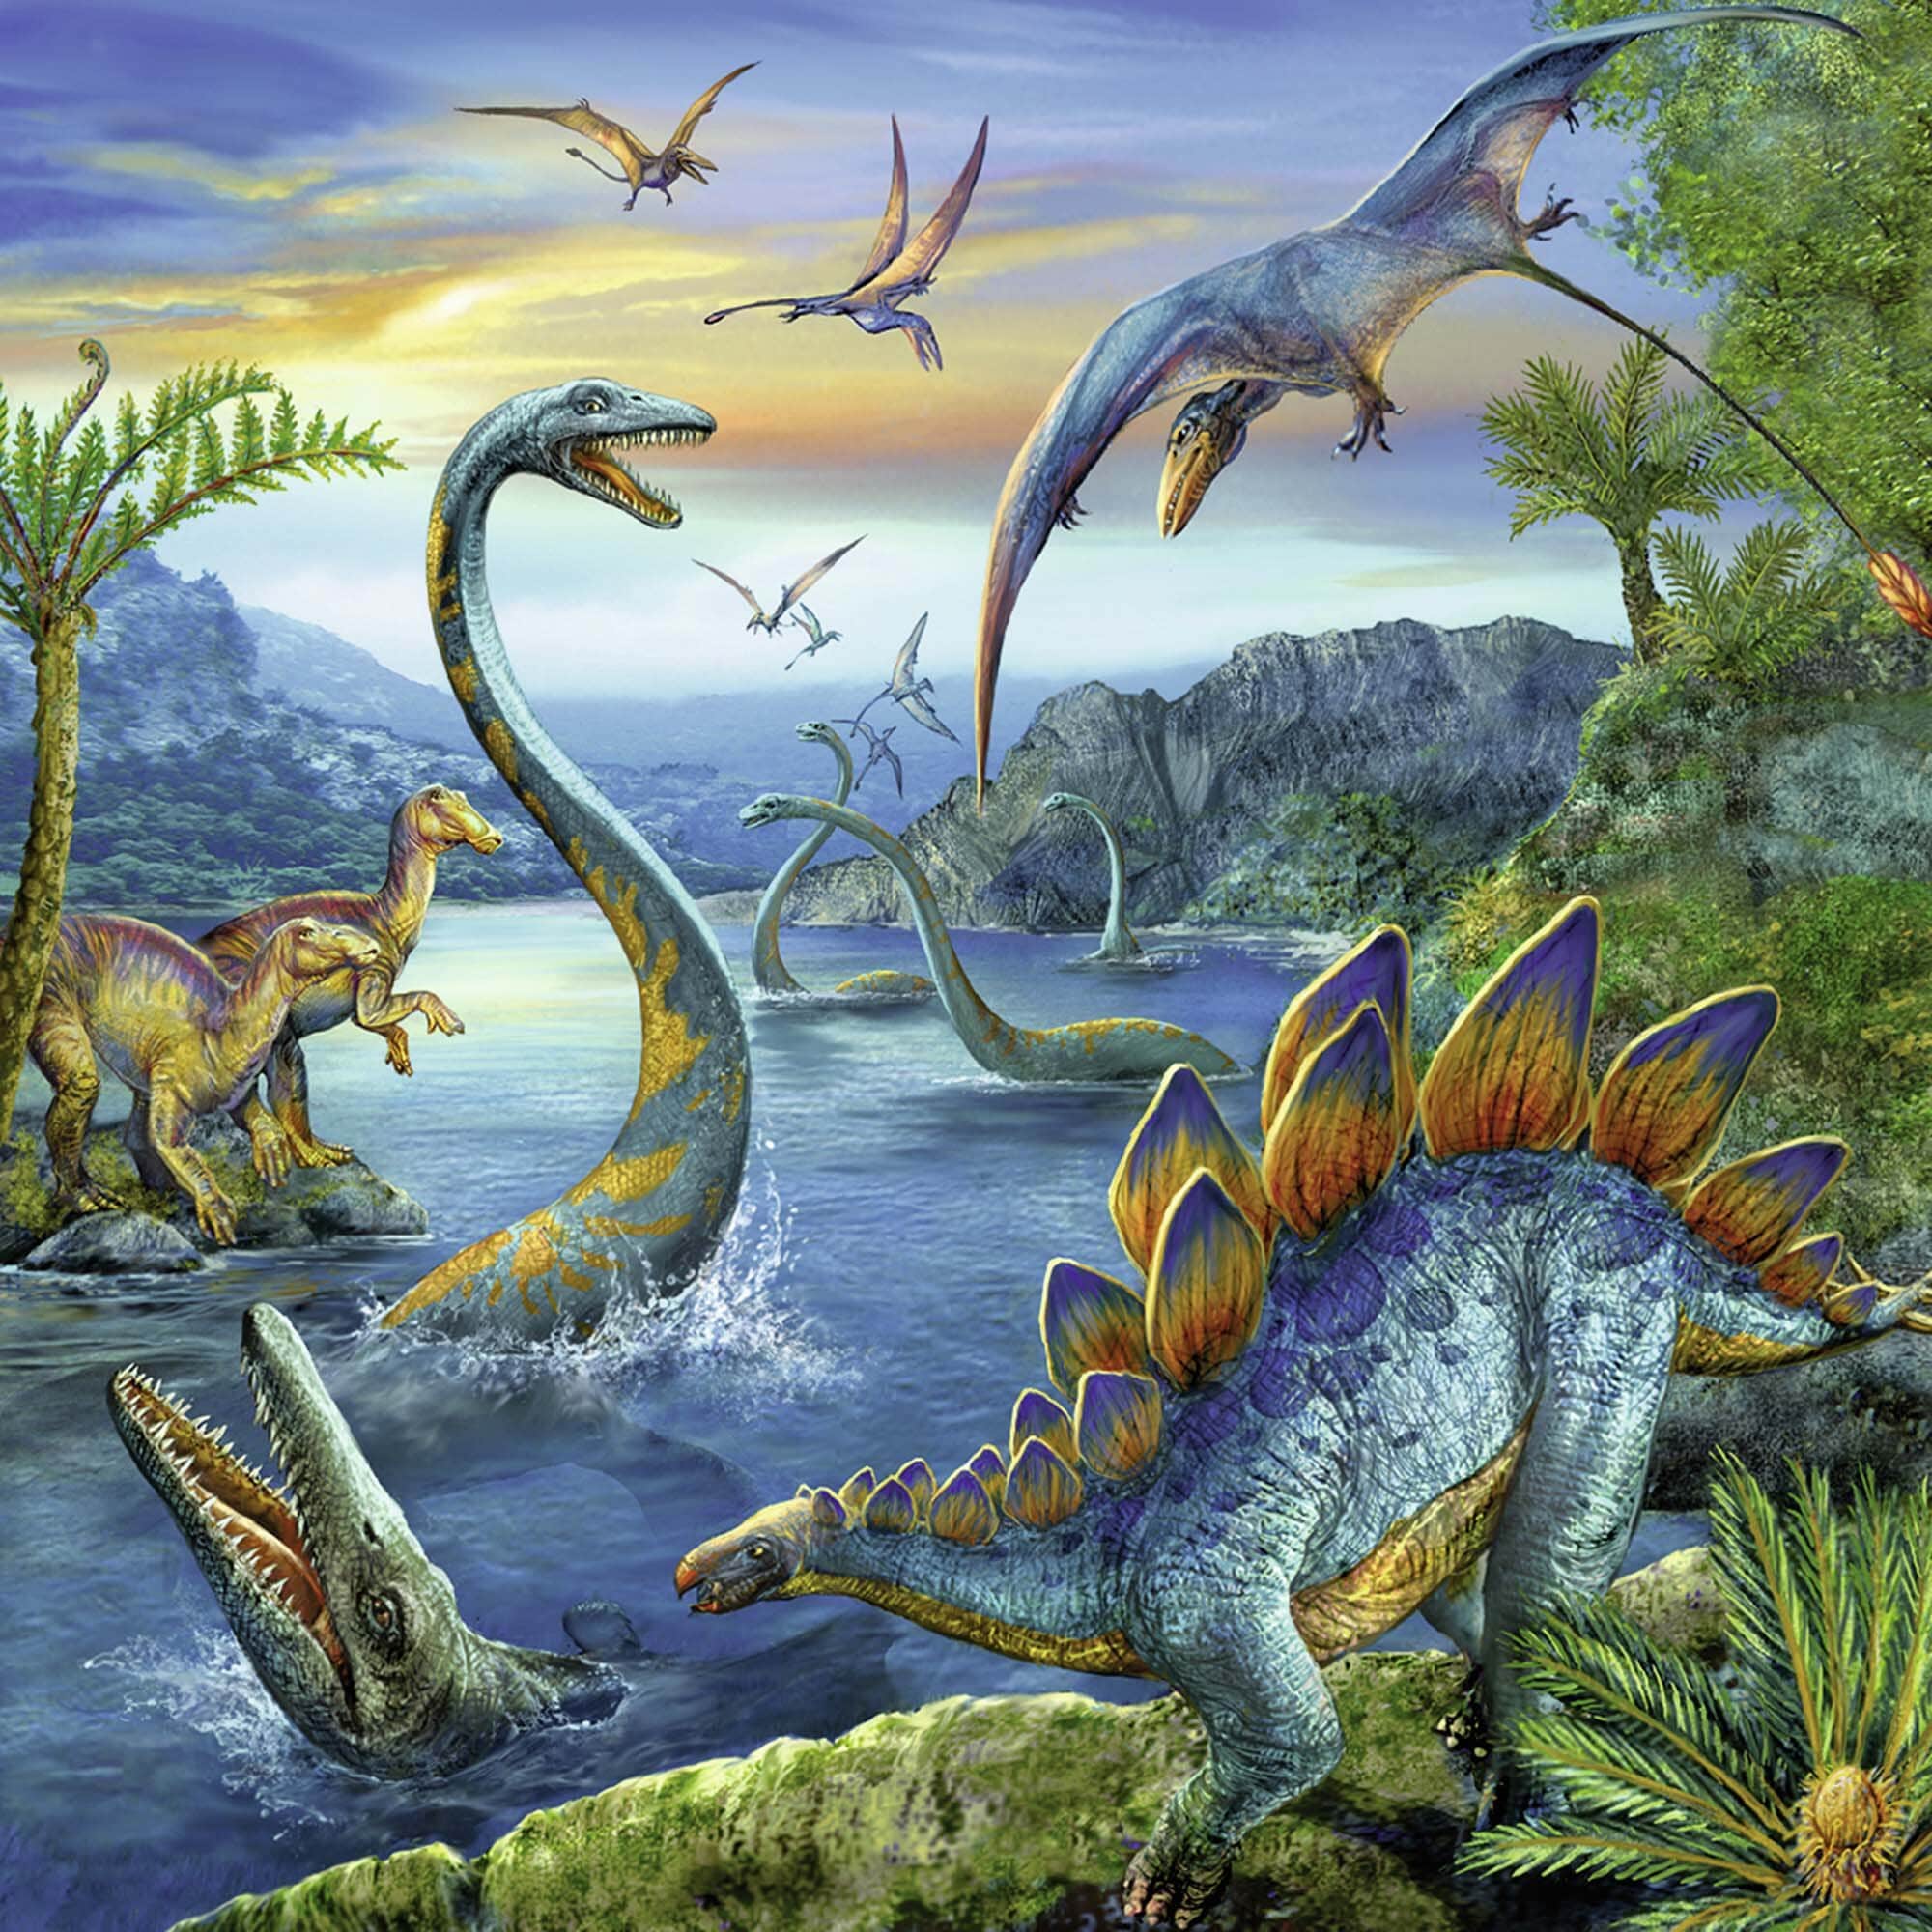 Ravensburger Puzzle - Faszination Dinosaurier 3x49 Teile